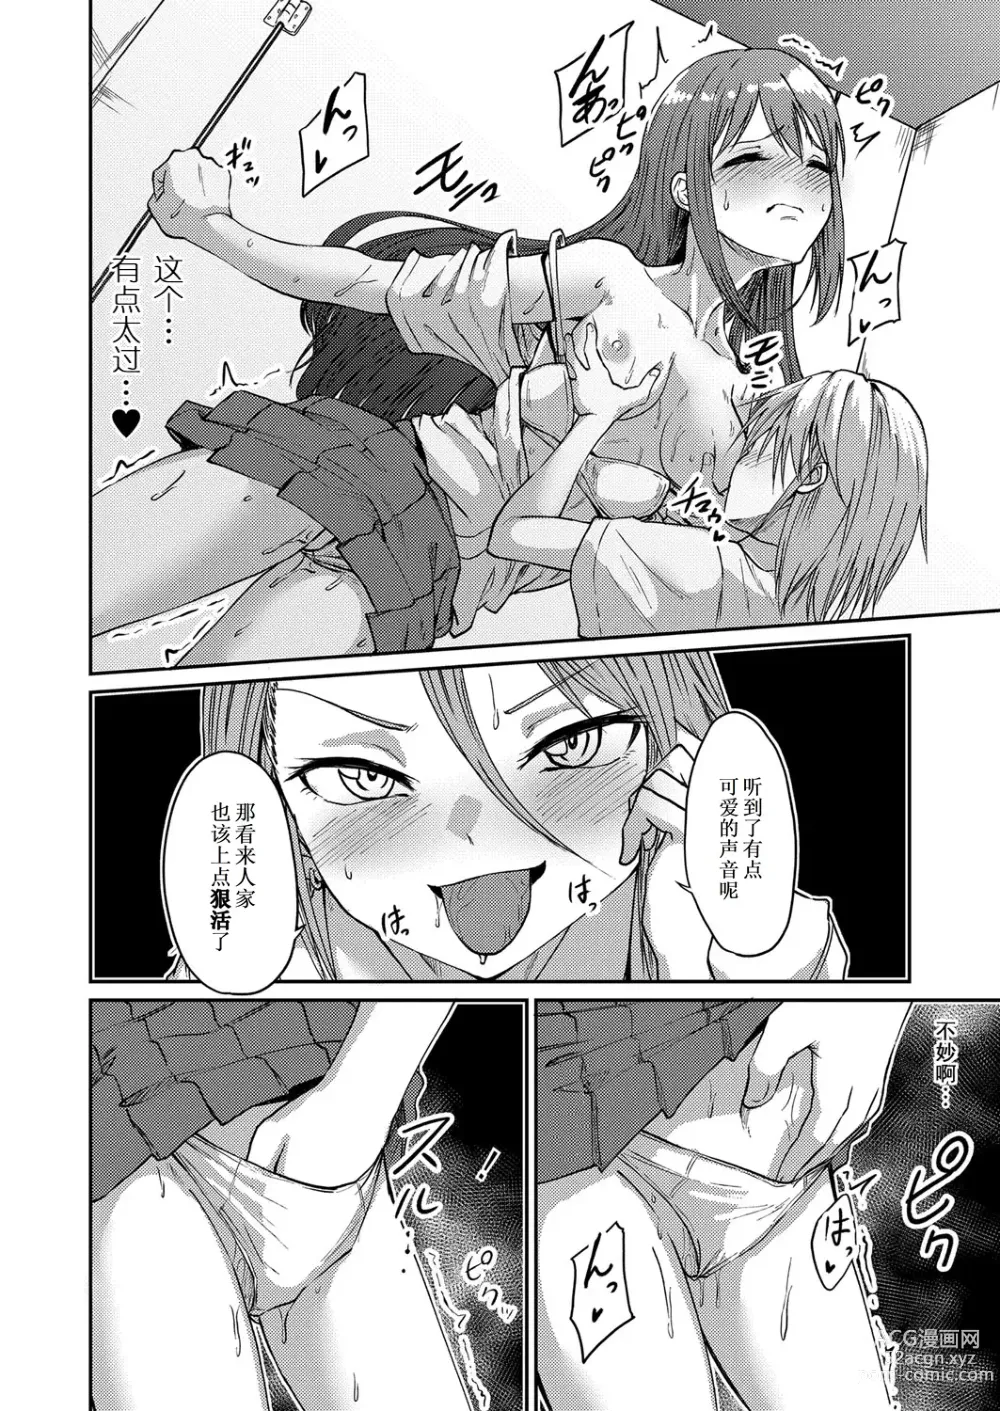 Page 6 of manga IREKAWARI